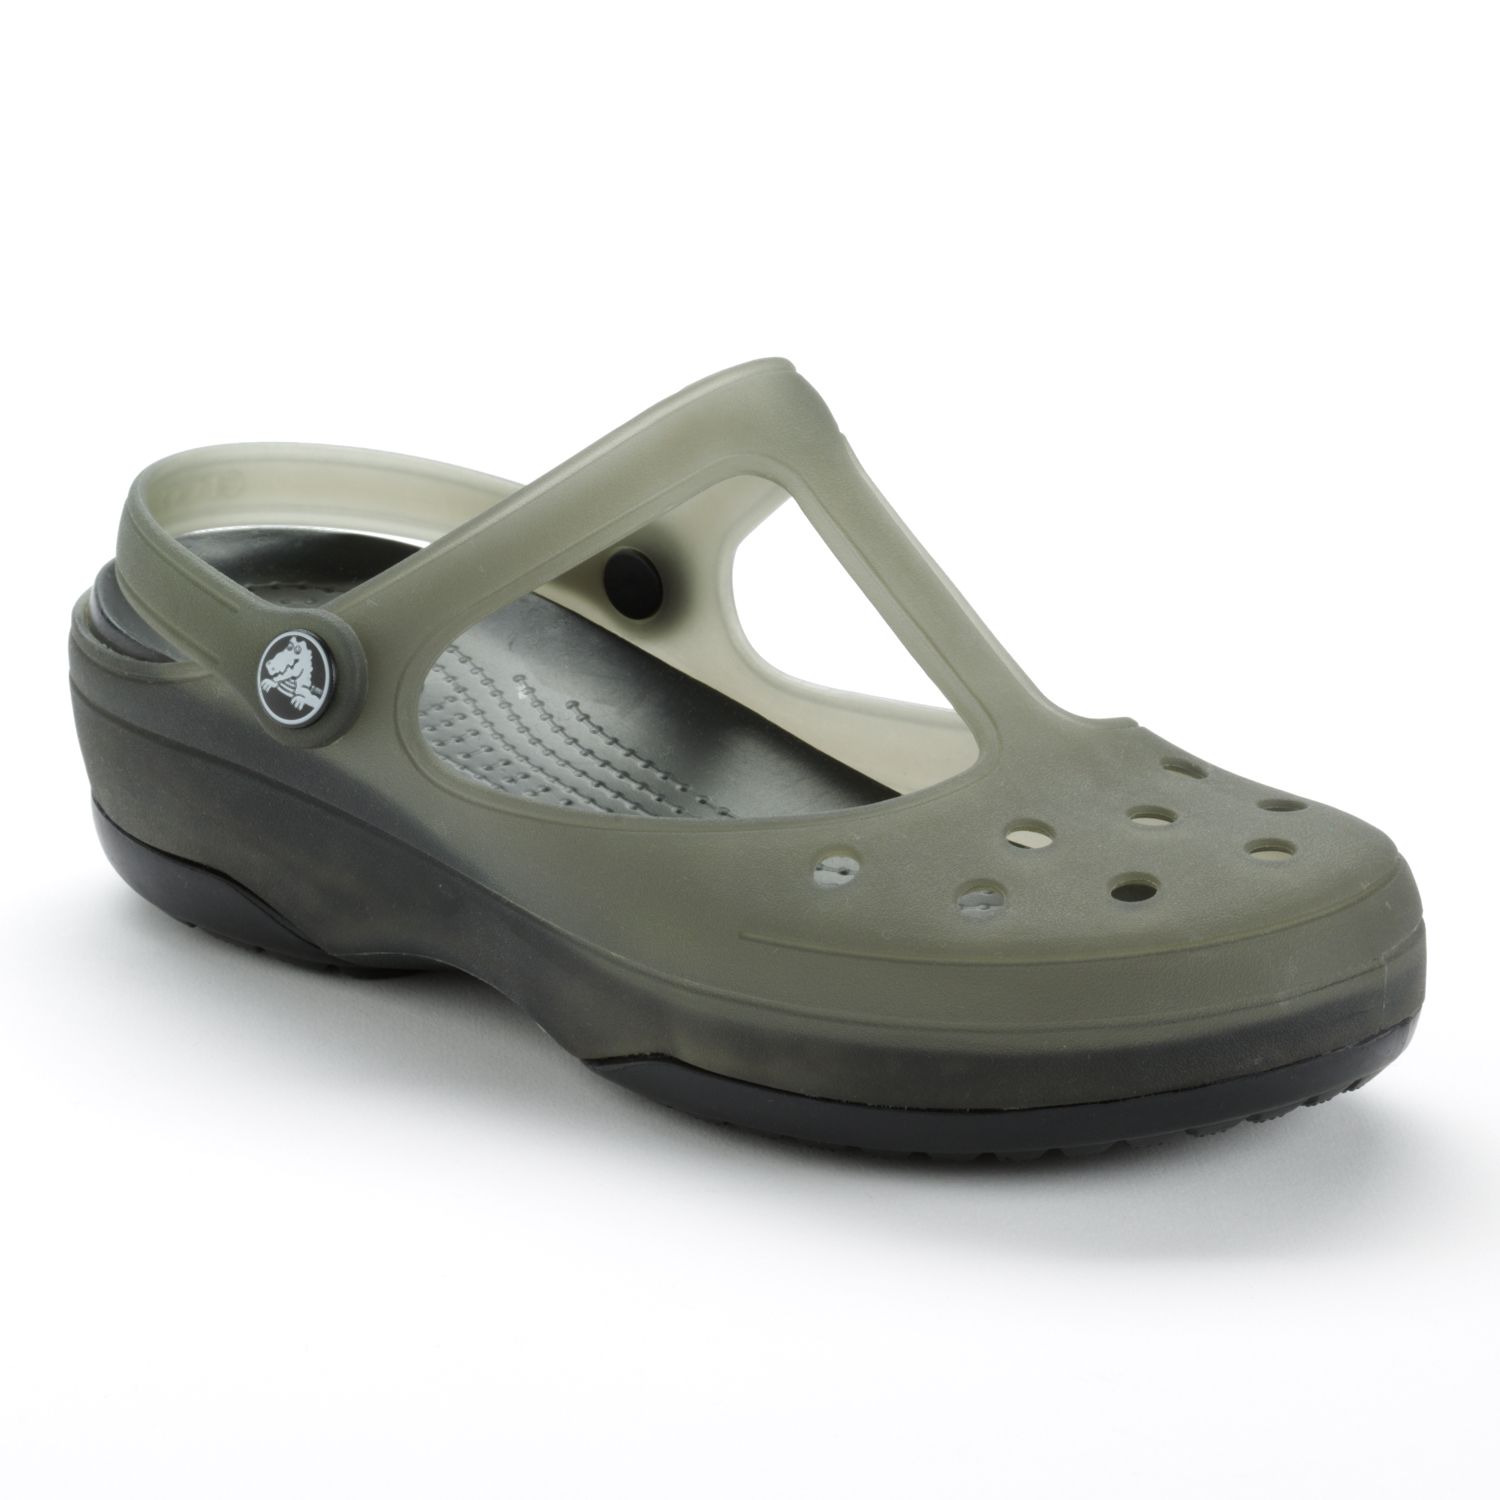 crocs mary jane shoes